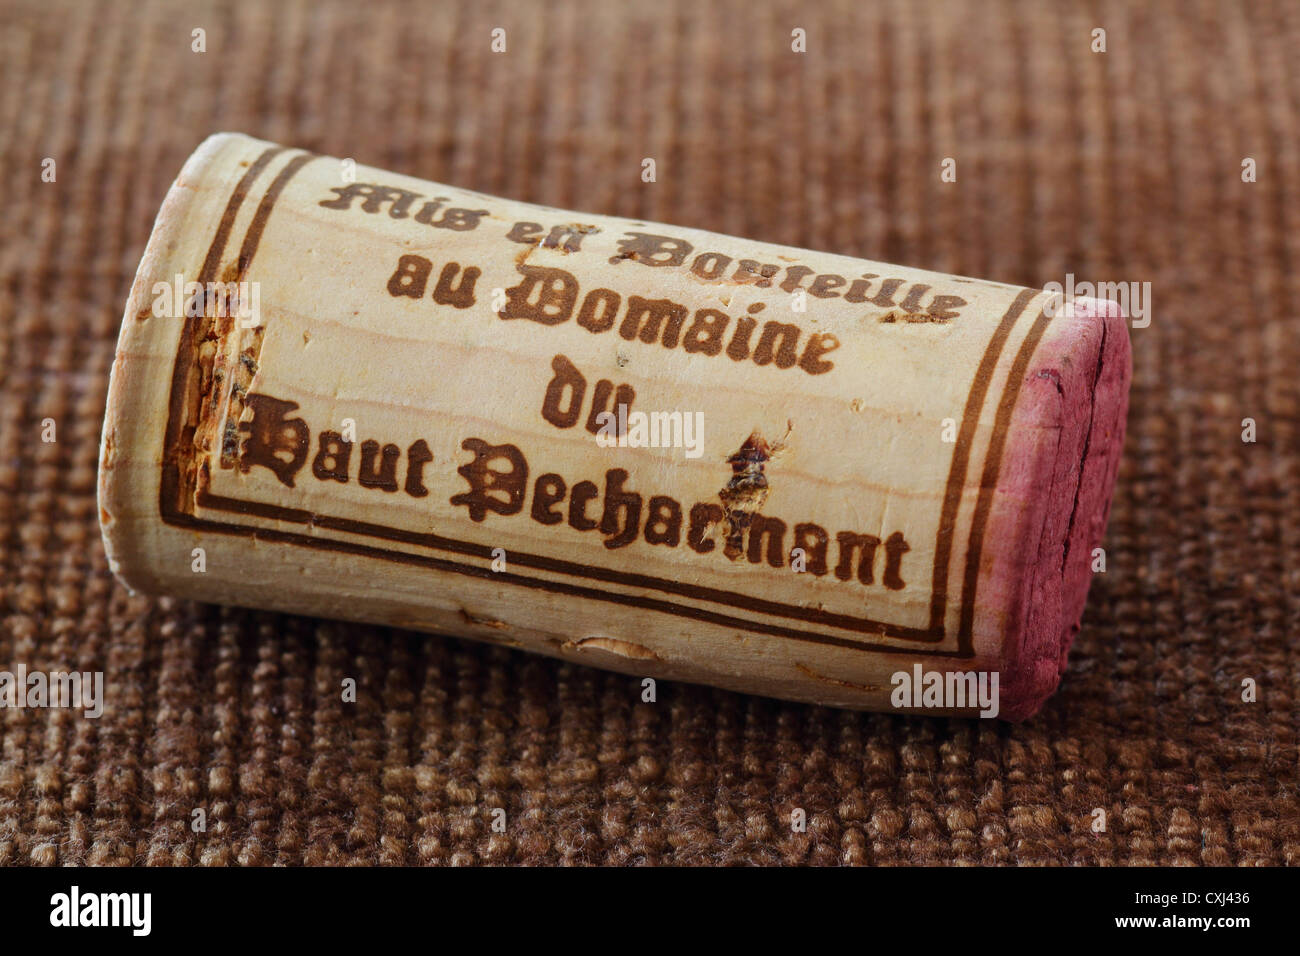 Apellation Pecharmant dry red wine cork stopper Stock Photo